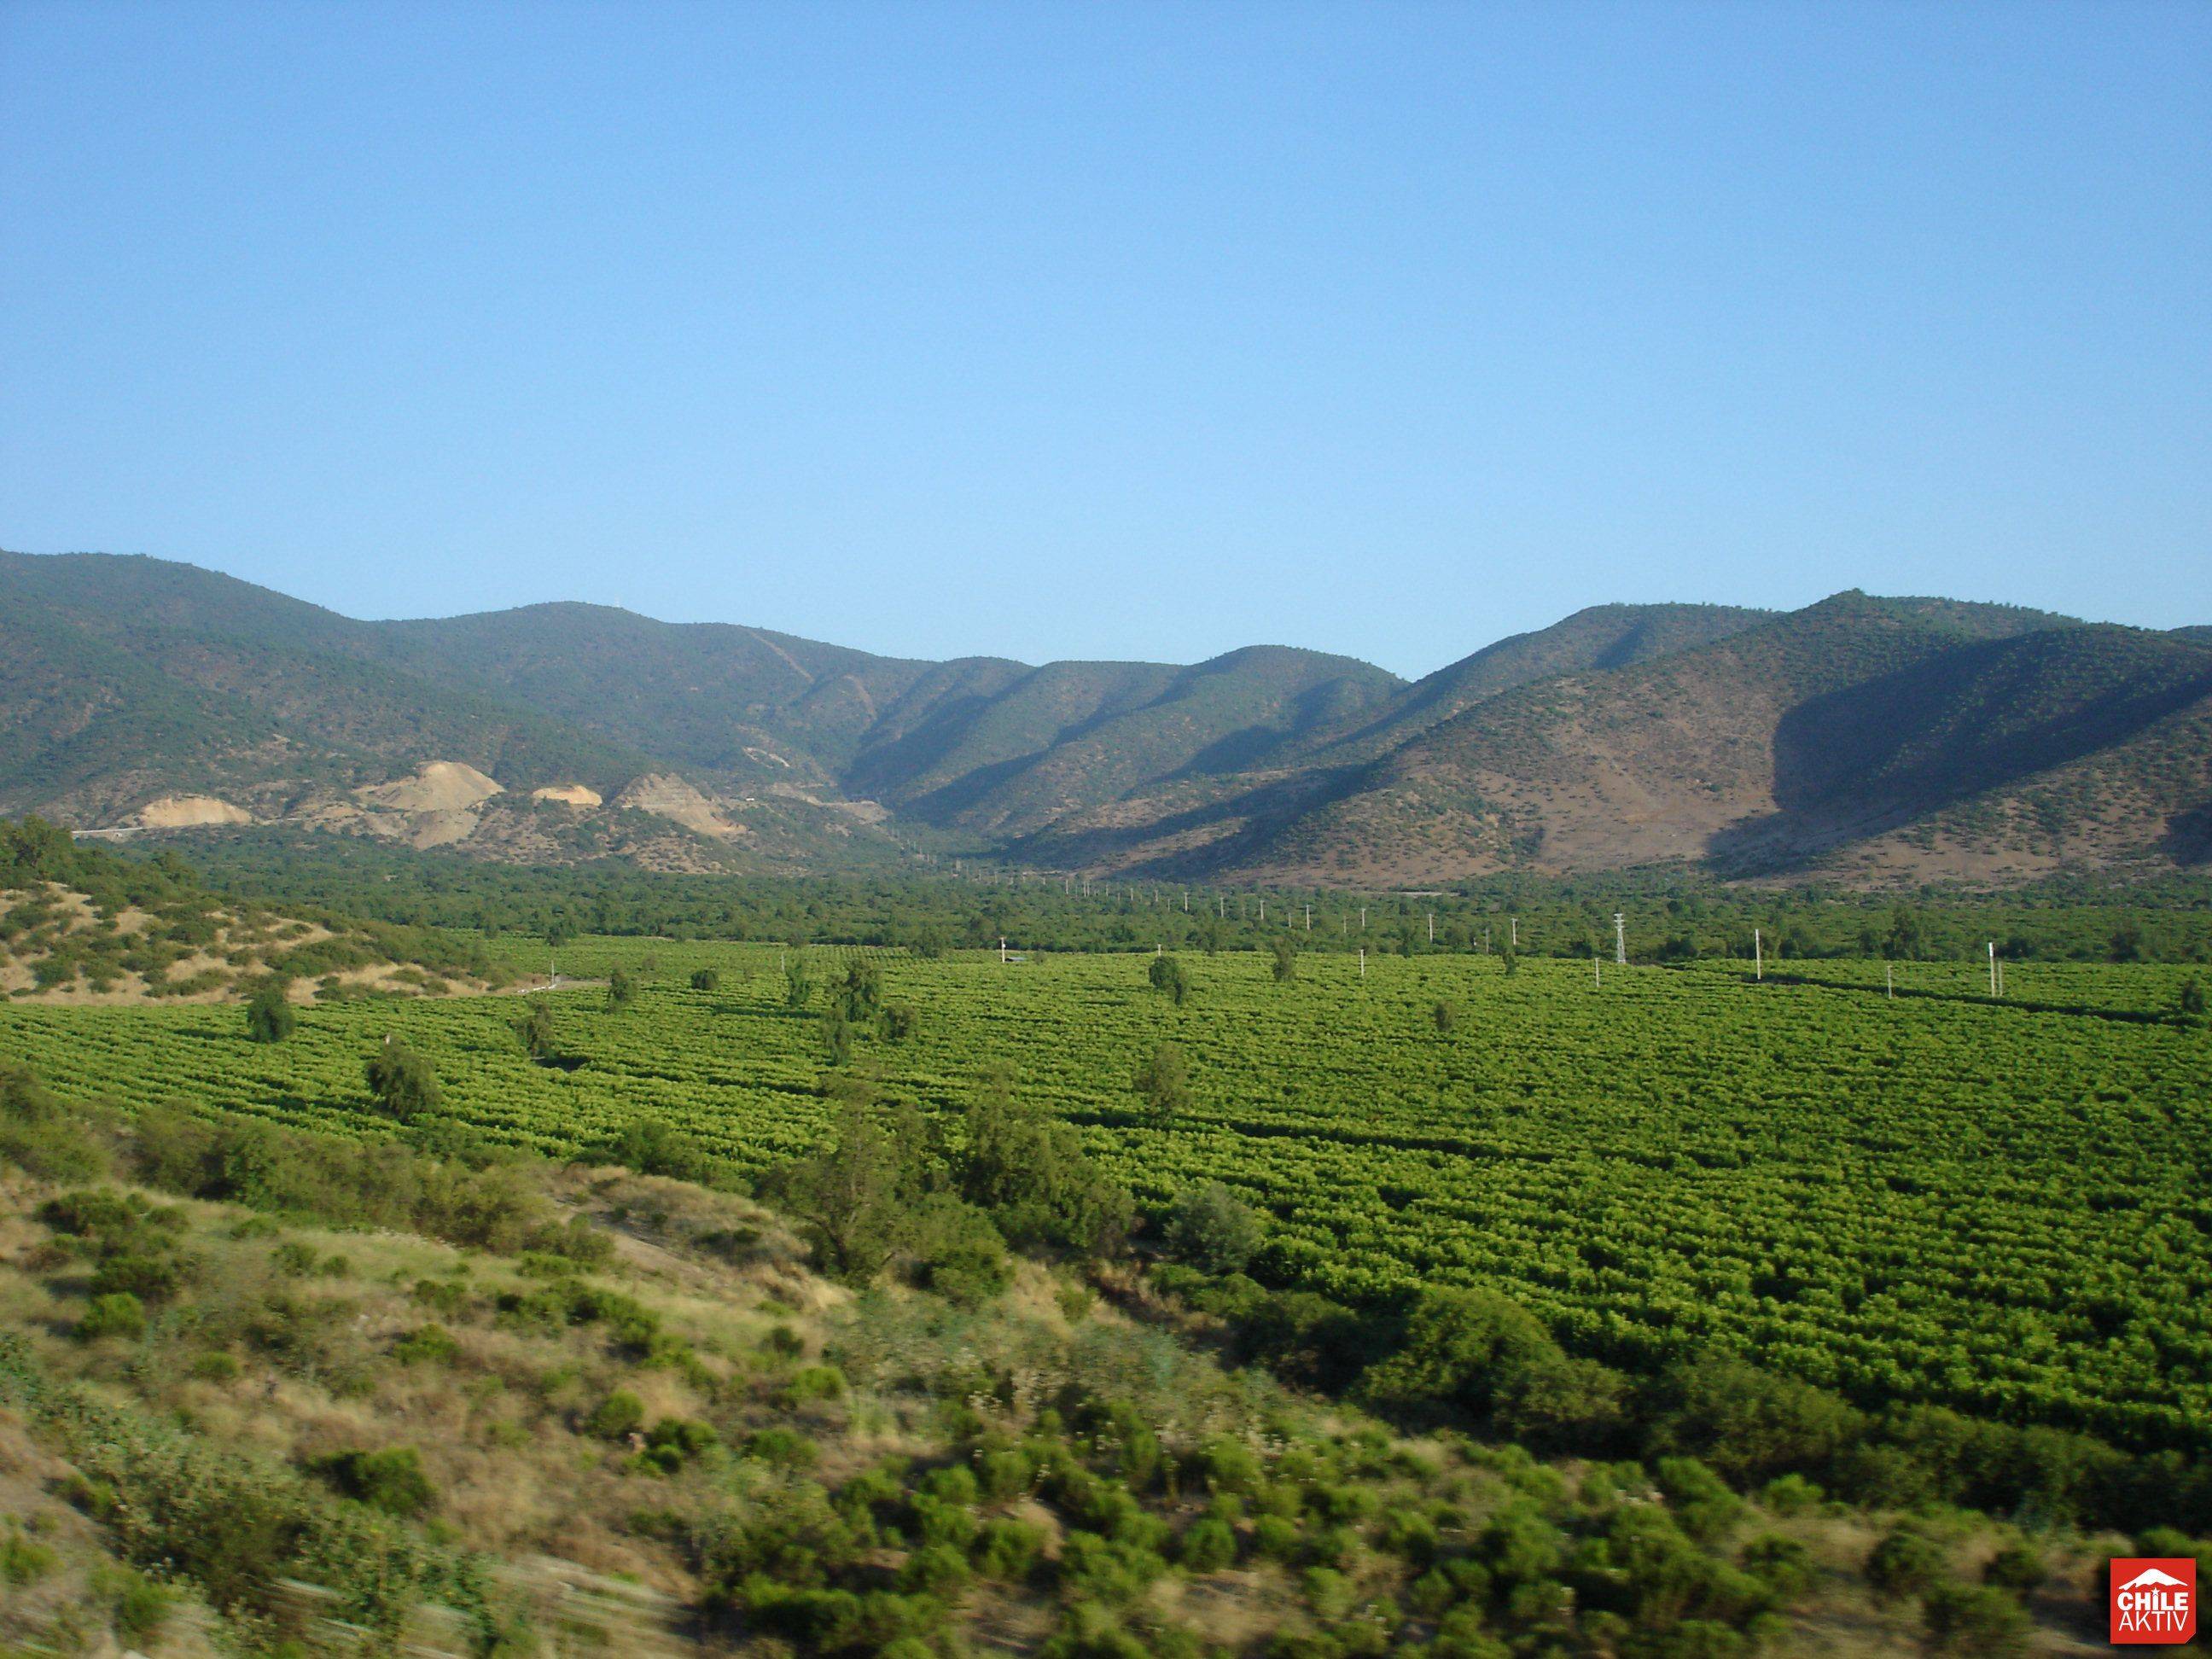 Santiago du Chili - Les vallées viticoles - Vigne Casas del Bosque - Vignes Matetic